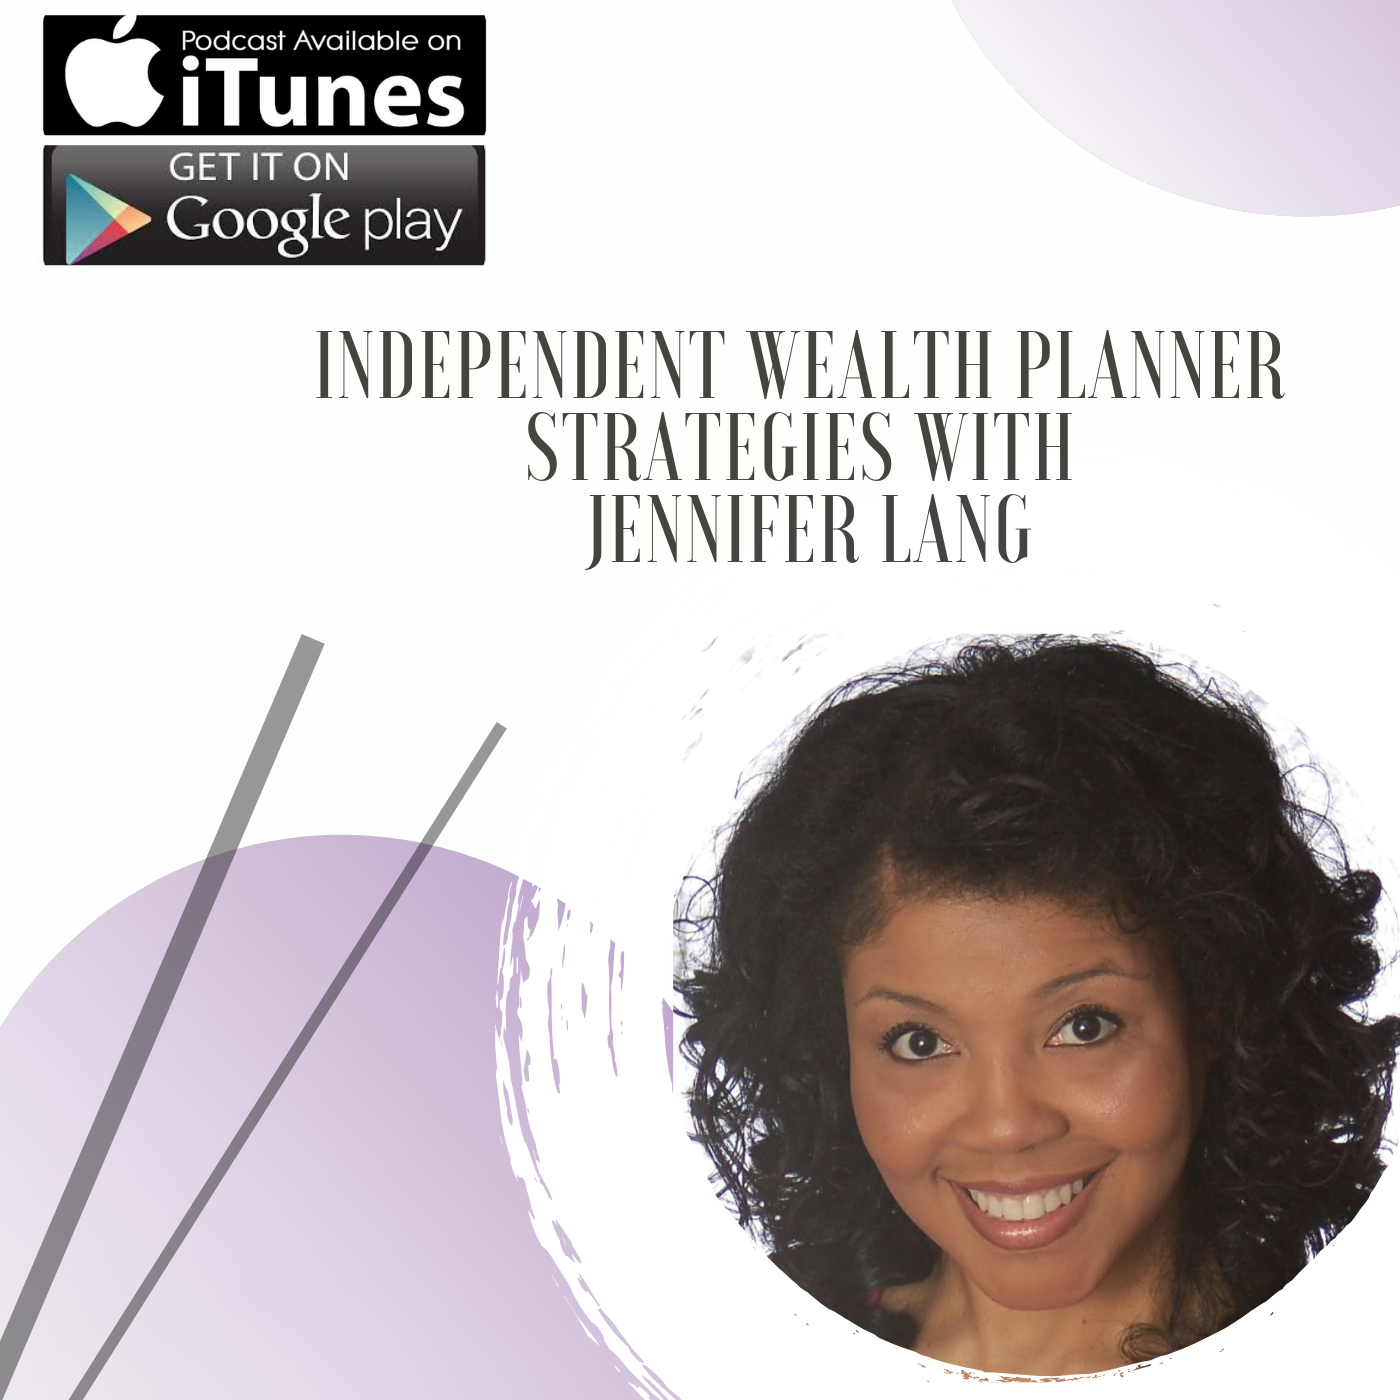 Independent Wealth Planner Strategies with Jennifer Lang